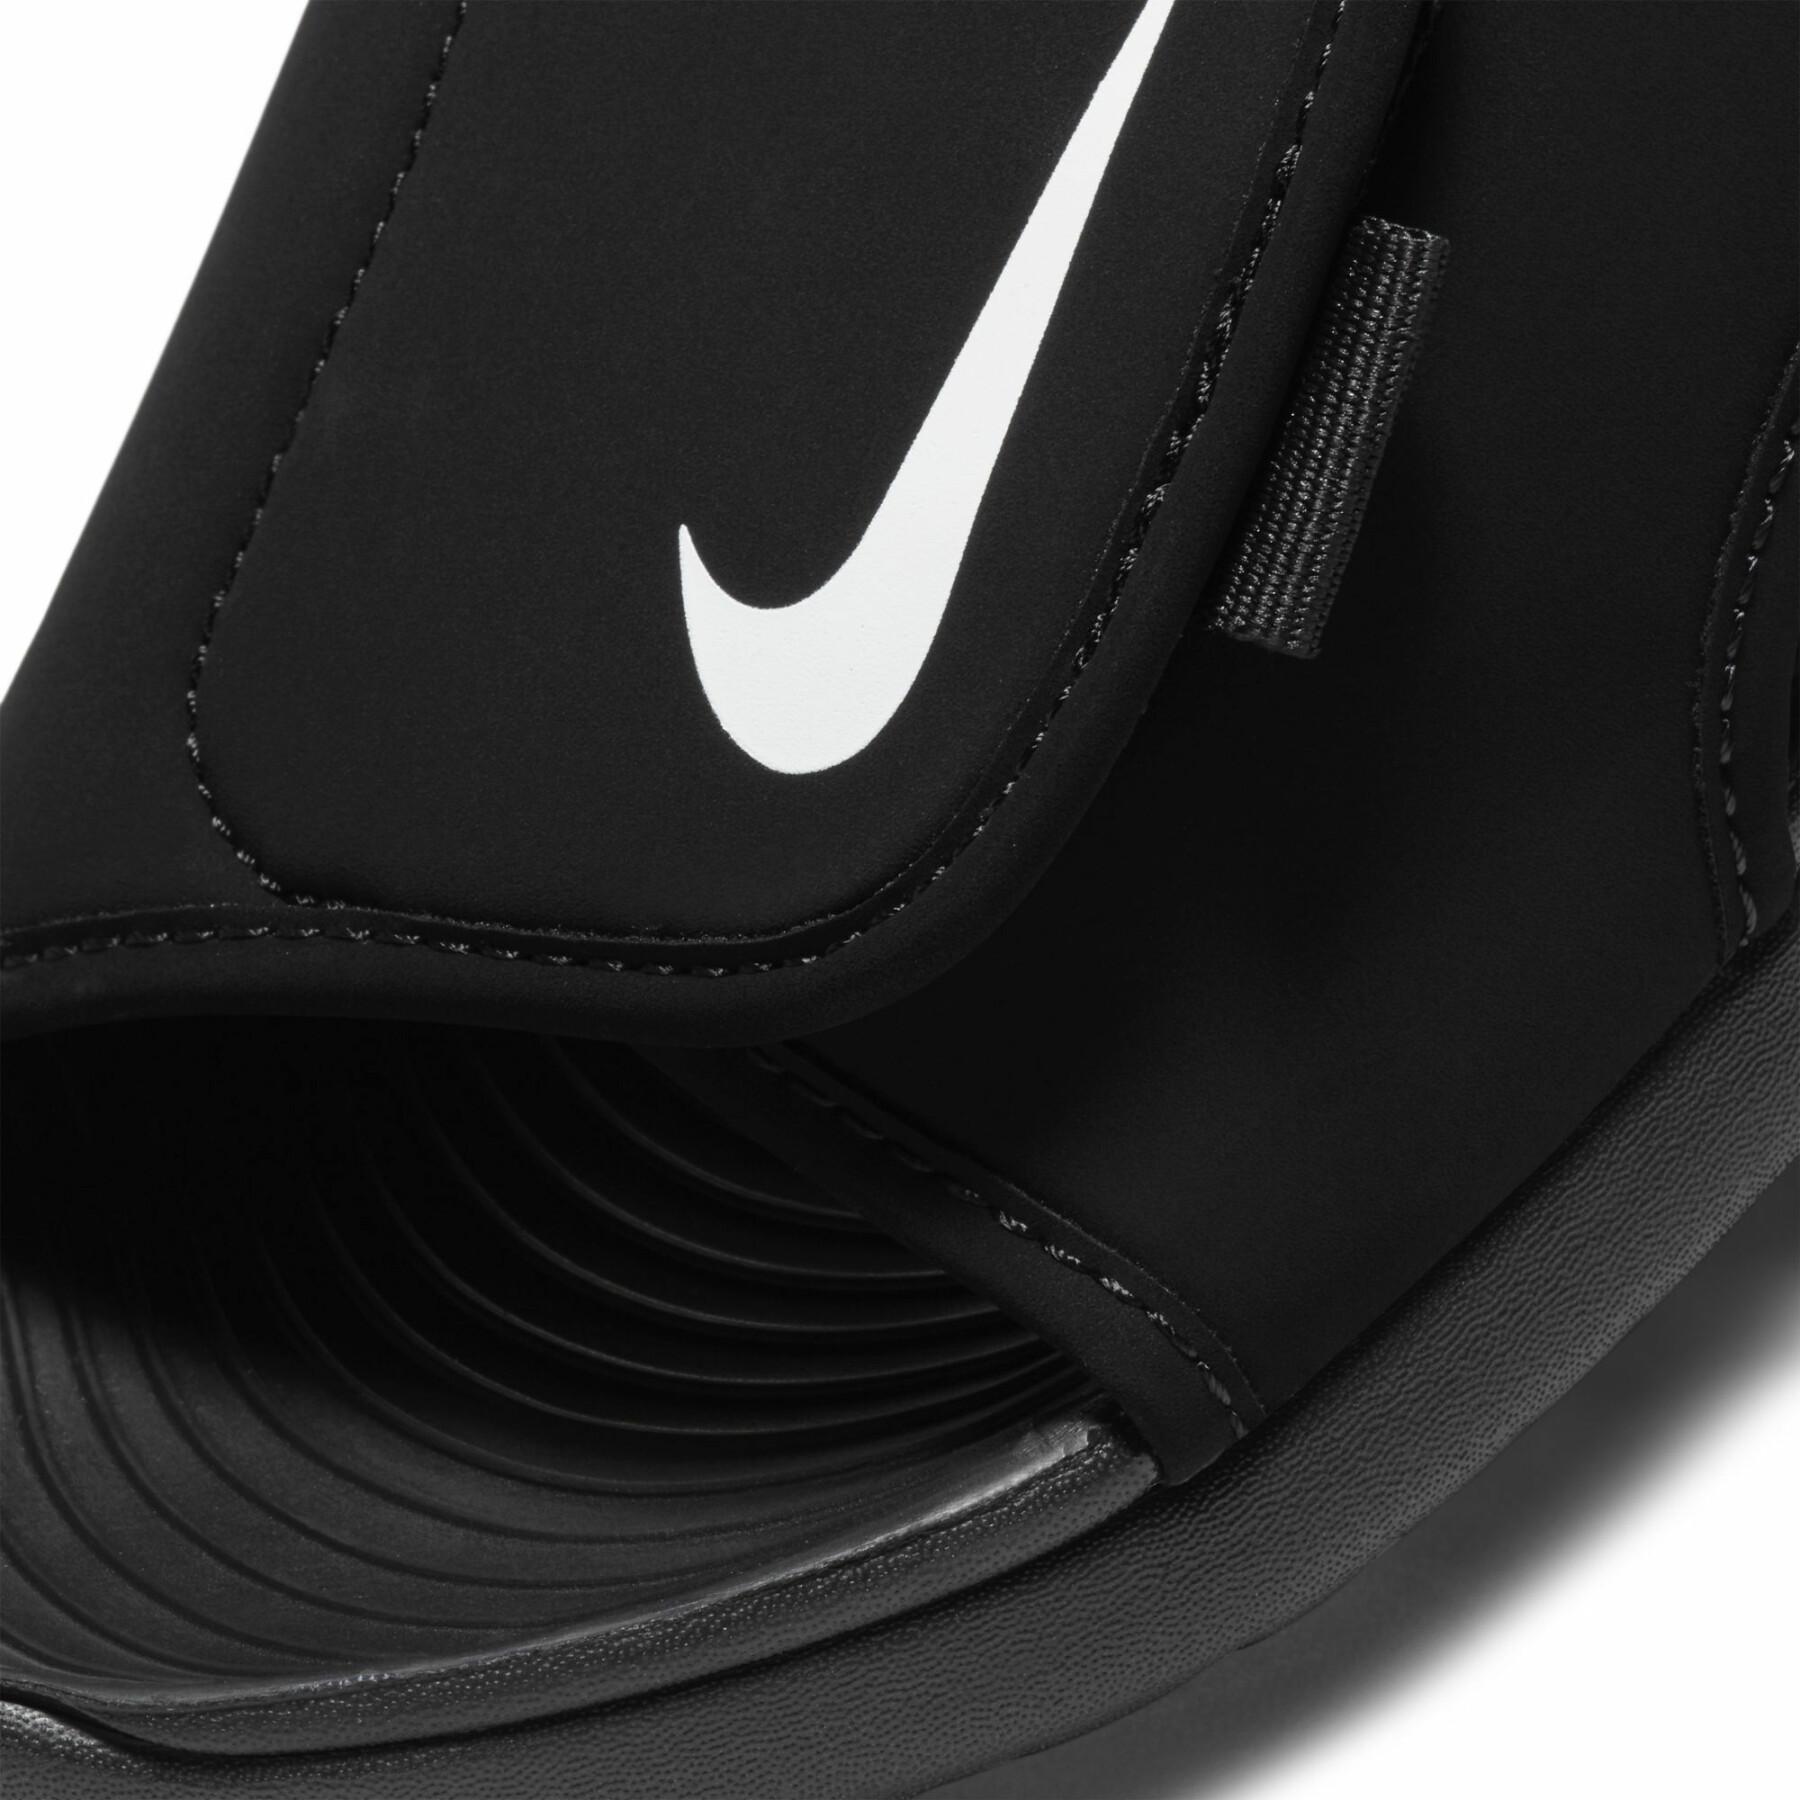 Children's sandals Nike Sunray Adjust 5 V2